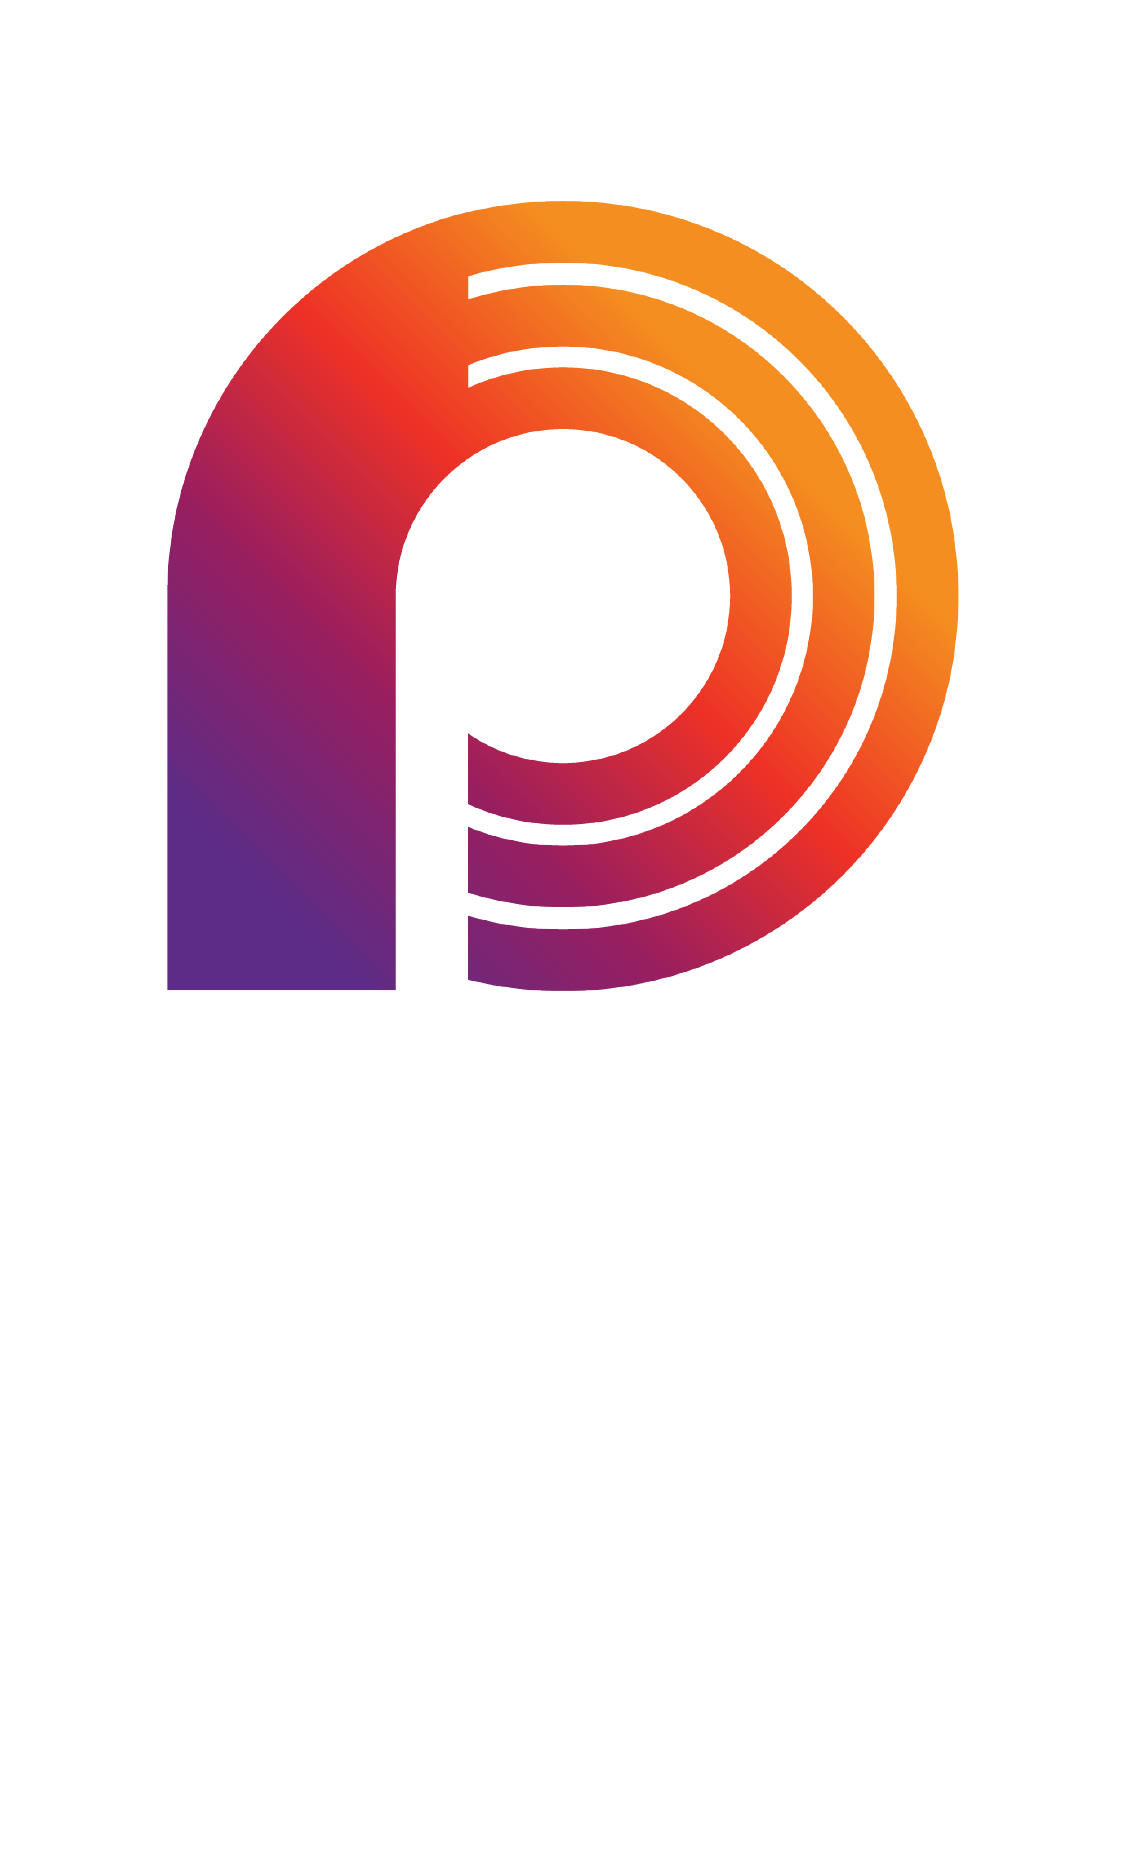 pmd-logo